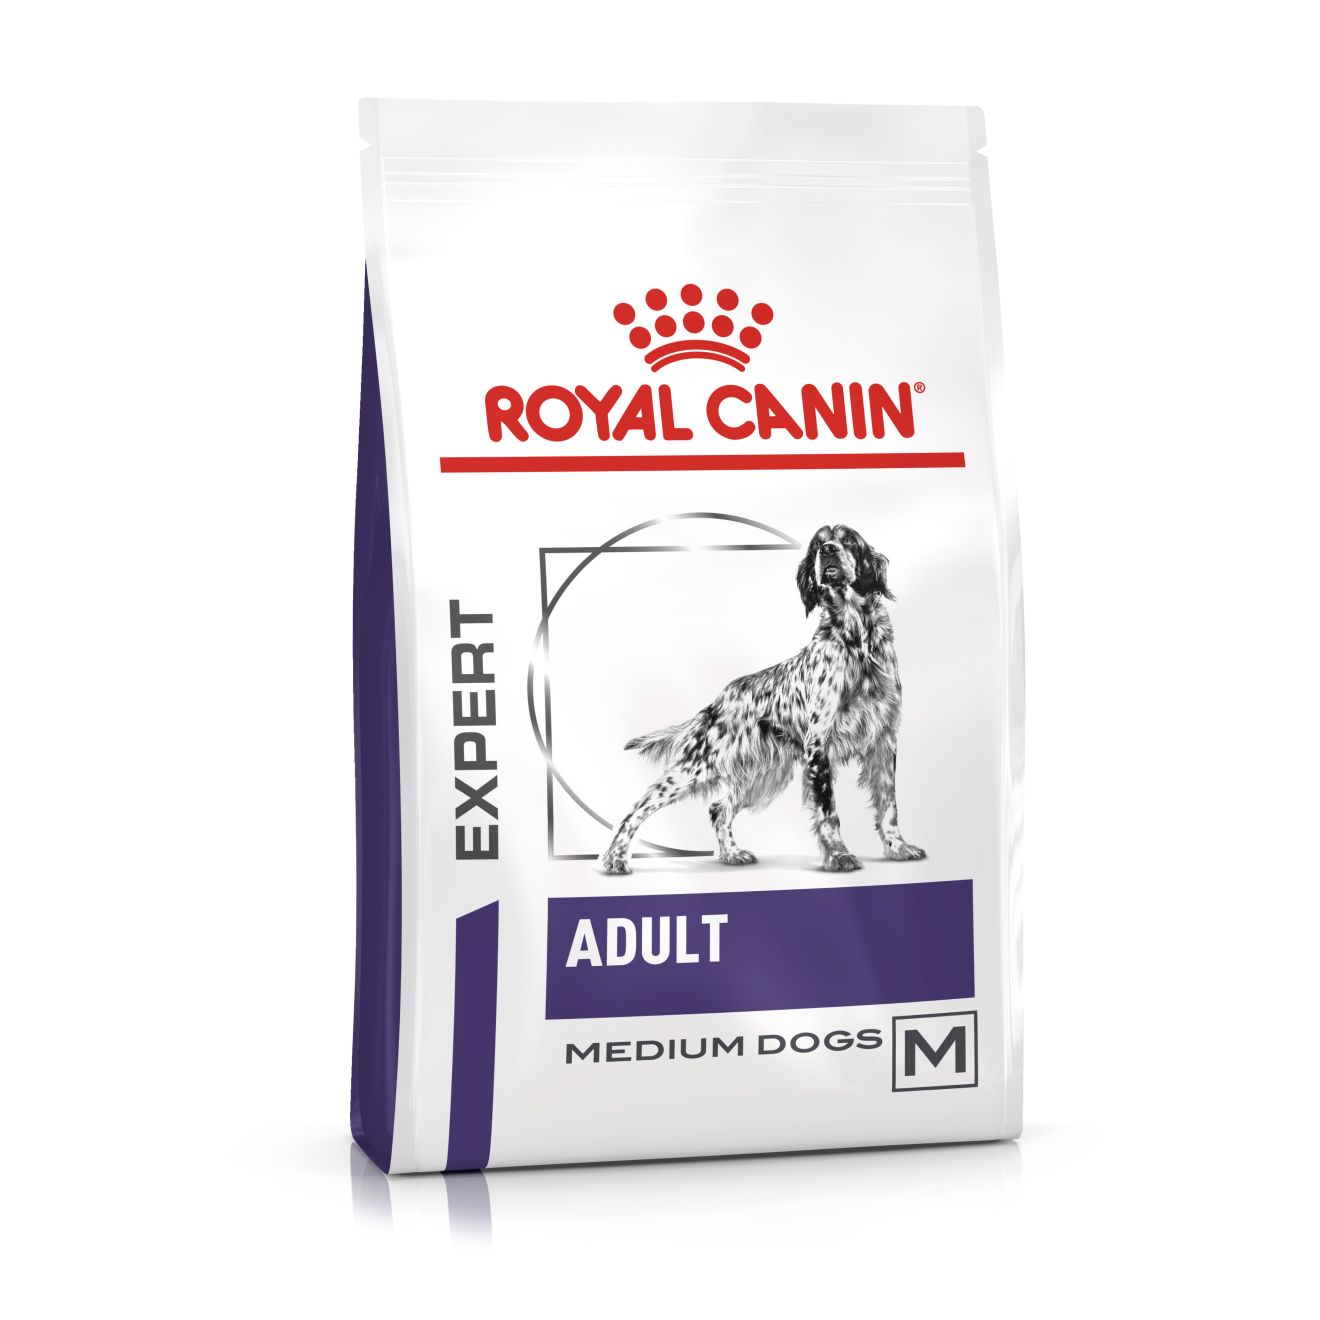 ROYAL CANIN Expert ADULT MEDIUM DOGS Trockenfutter für Hunde 4 kg